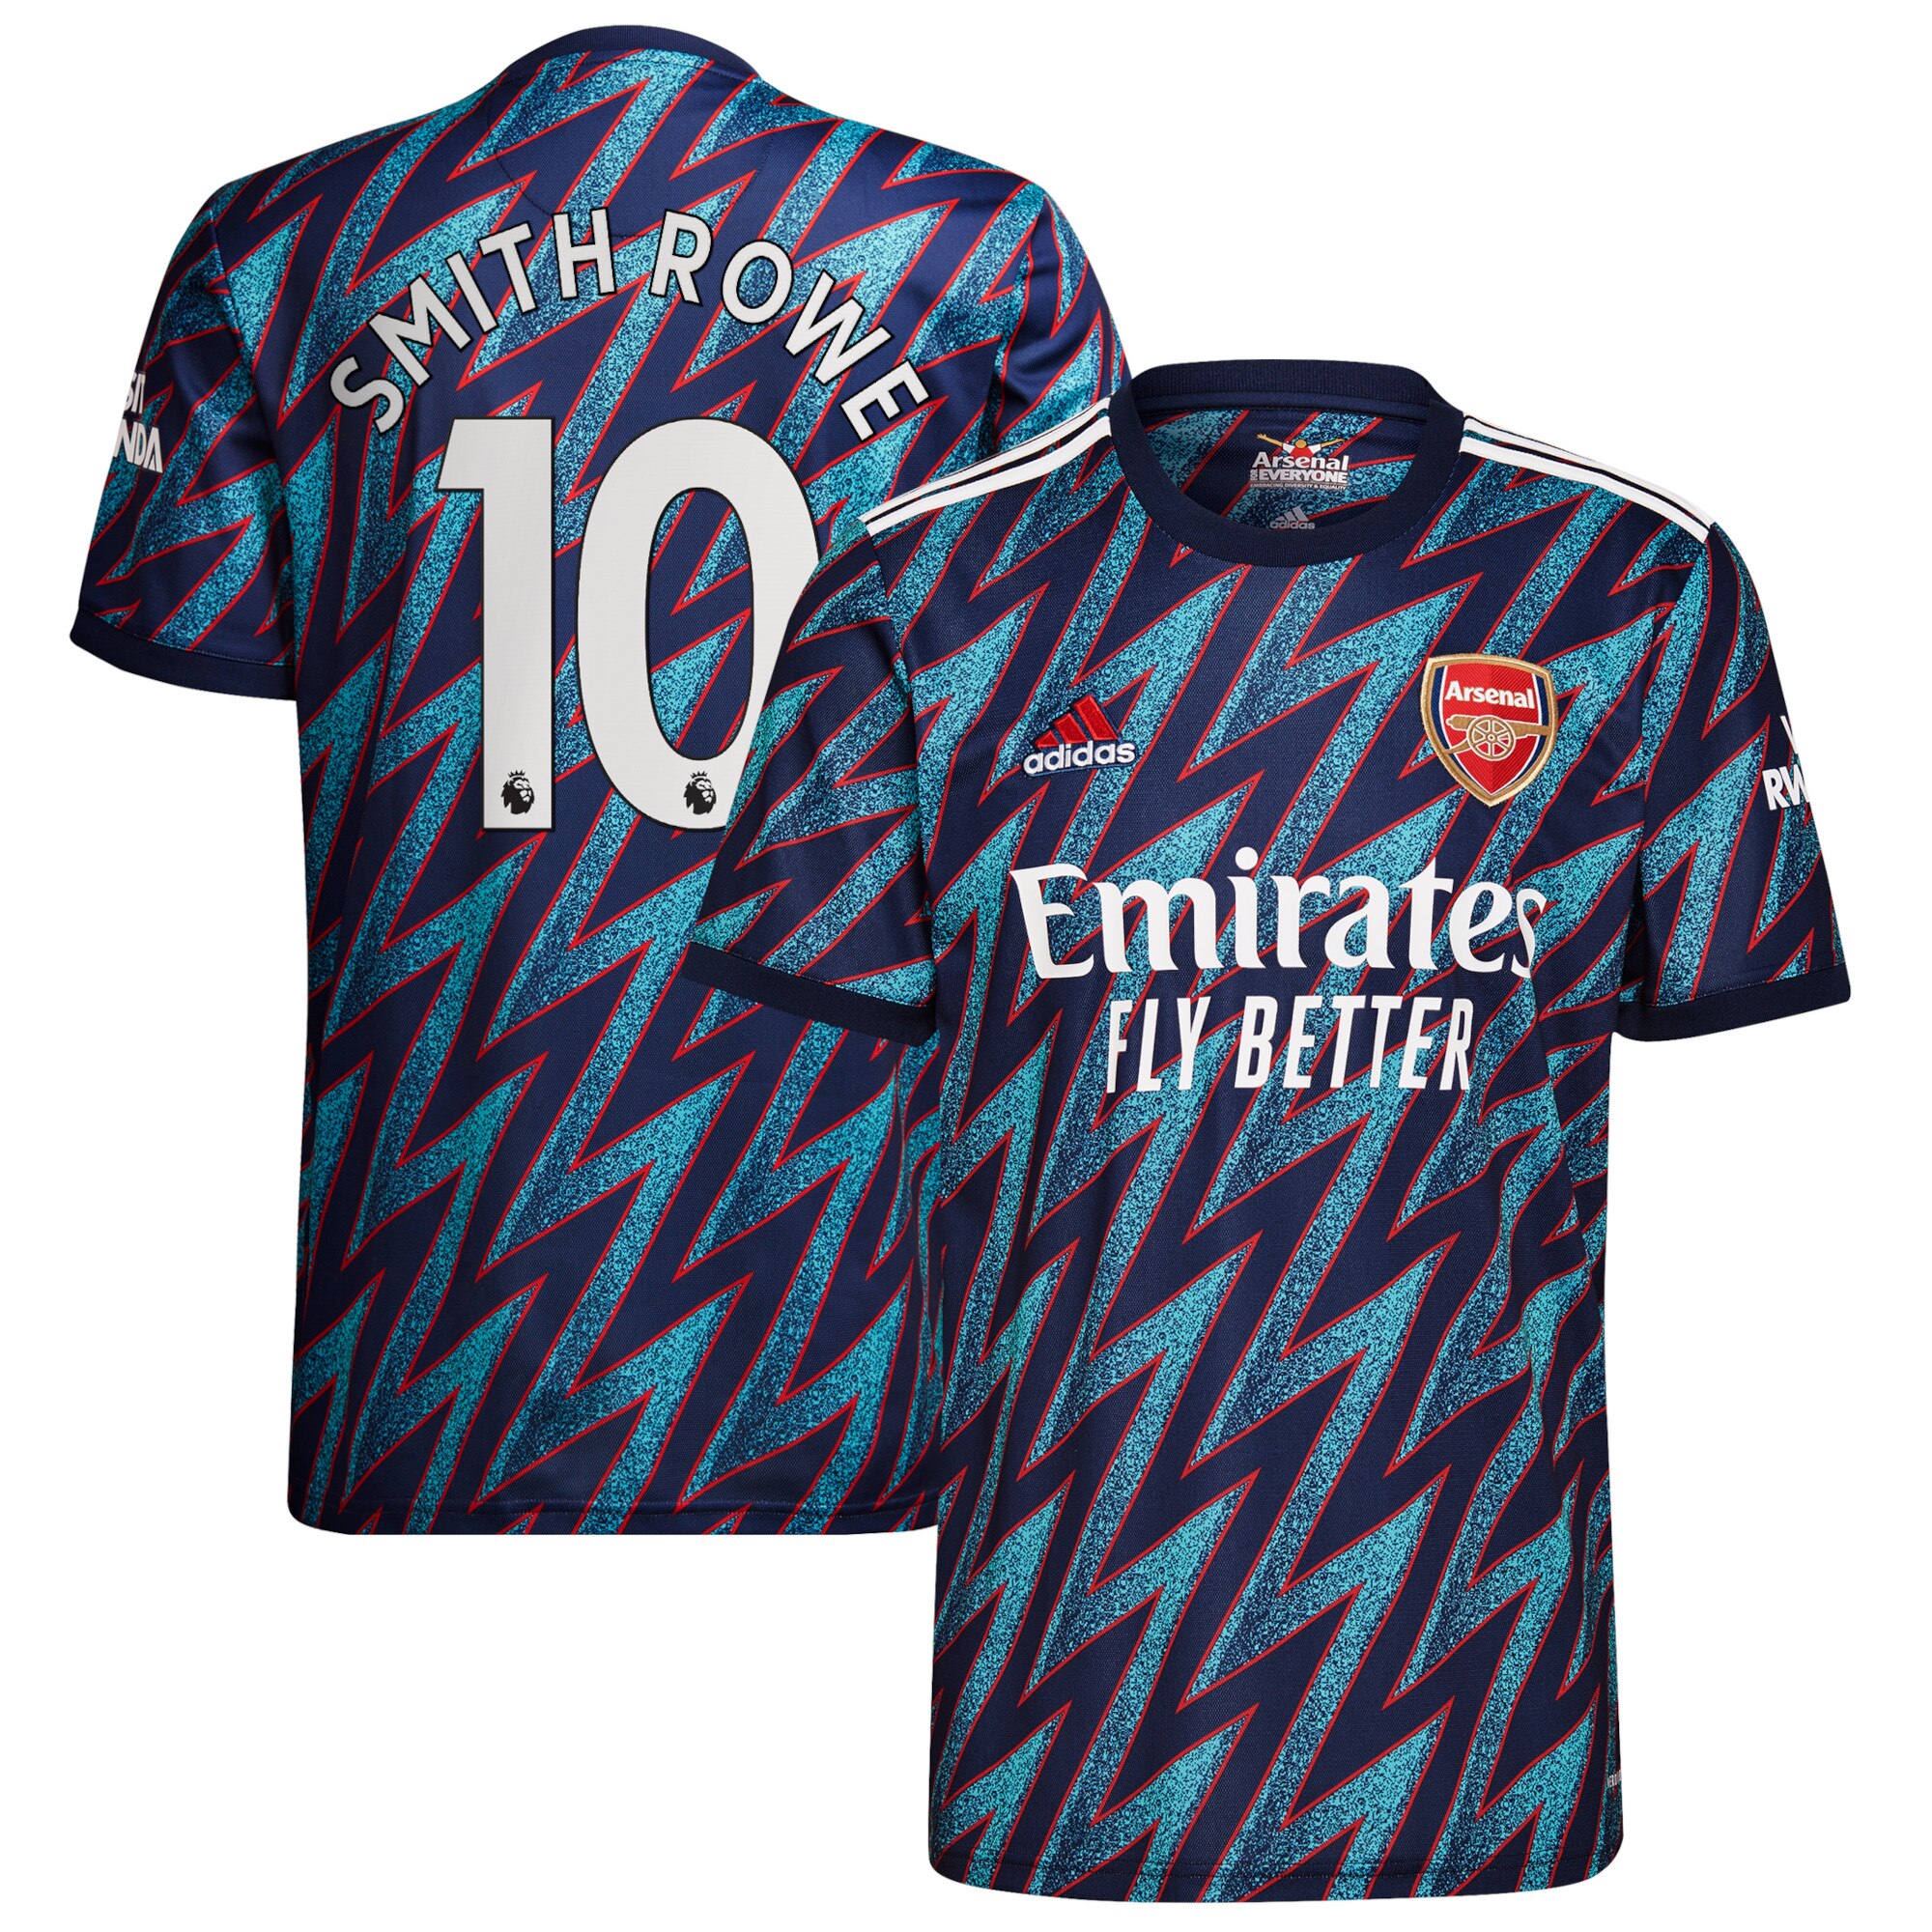 Arsenal Third Shirt 2021-22 with Smith Rowe 10 printing